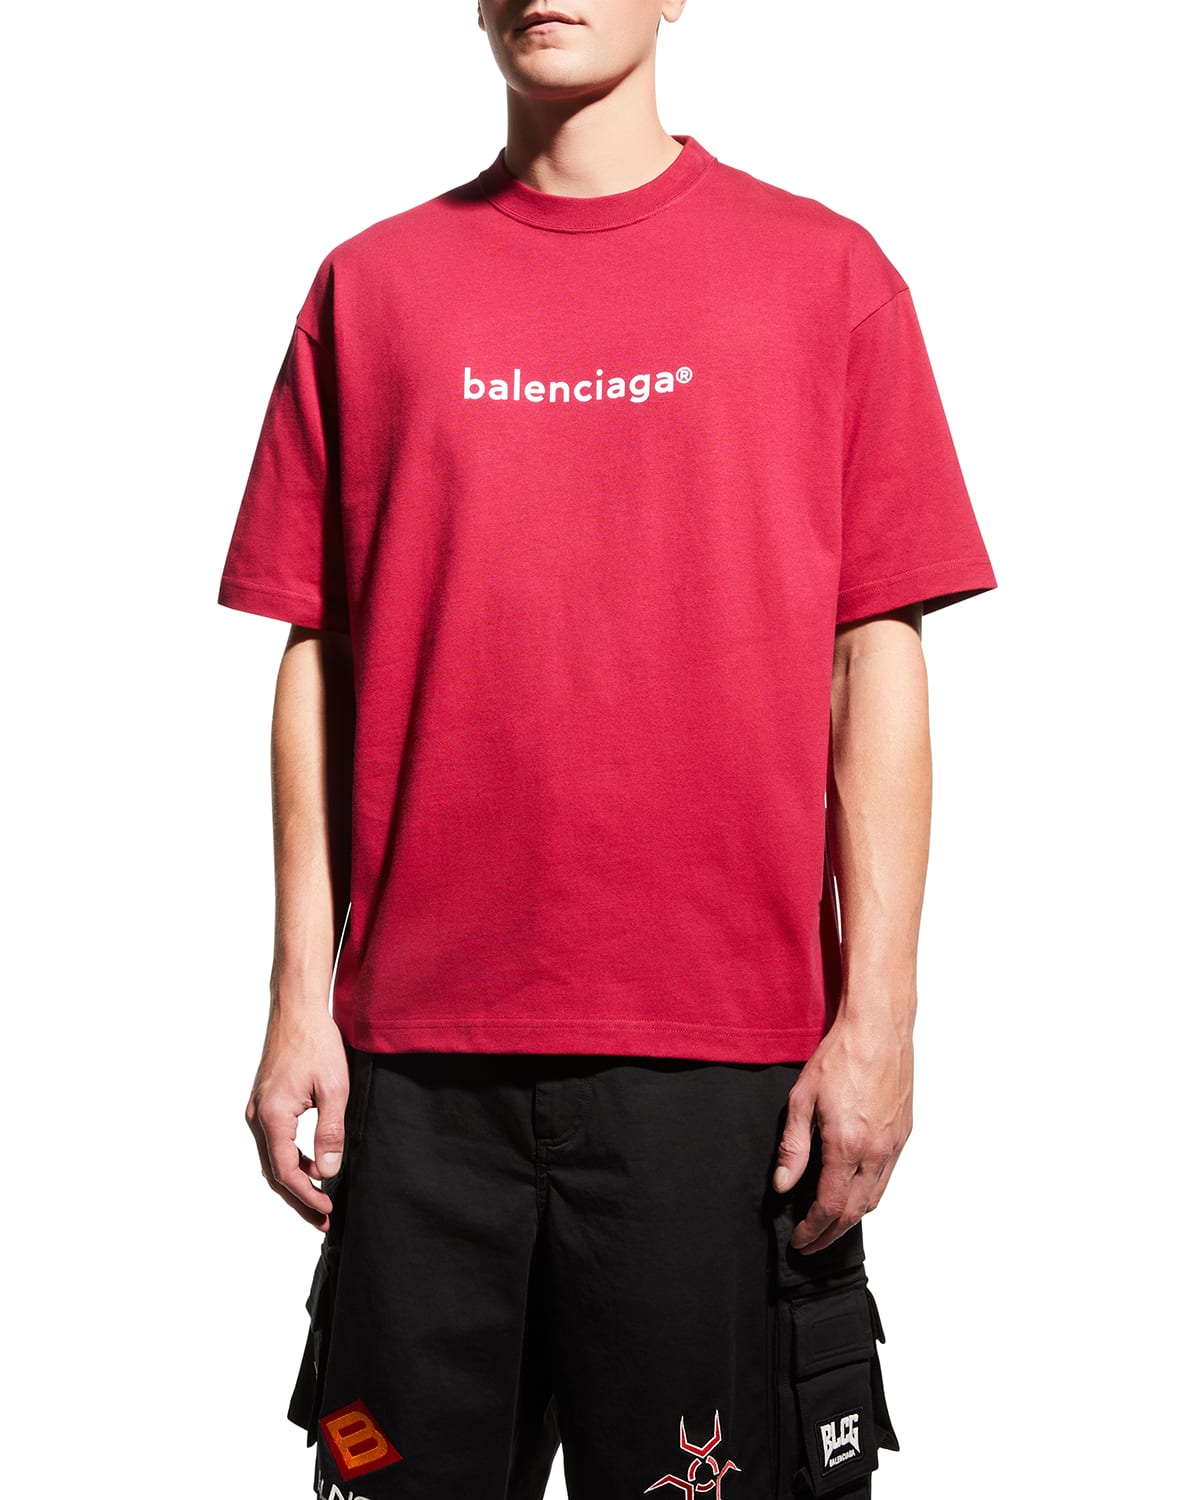 Balenciaga Tshirt | Neiman Marcus